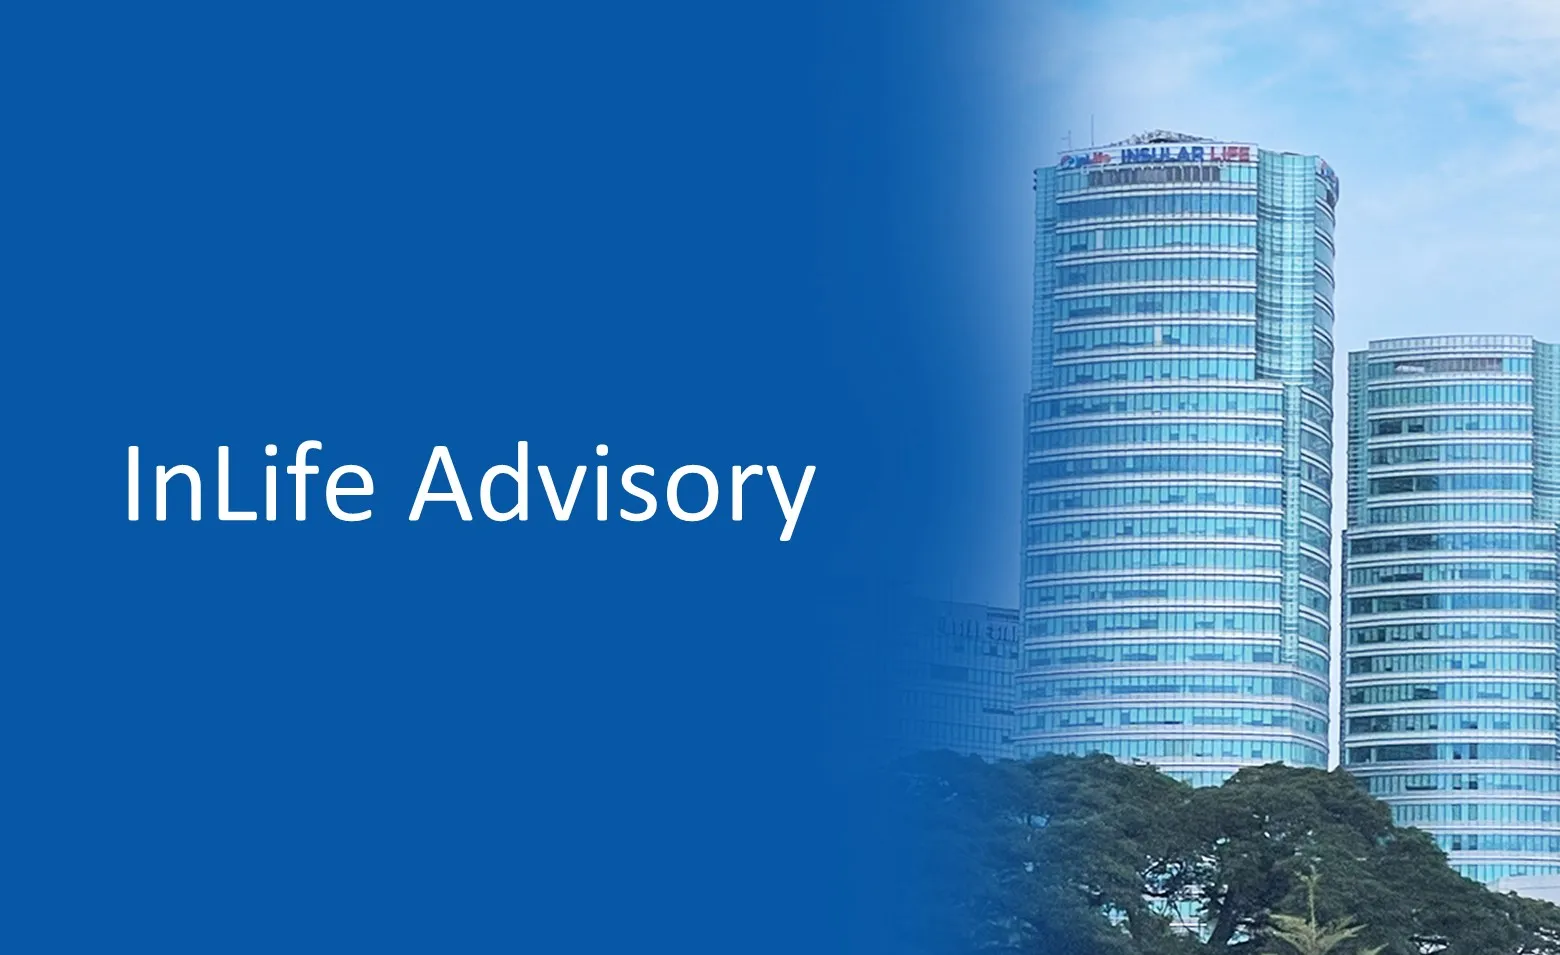 inlife-advisory-on-october-31-to-november-1